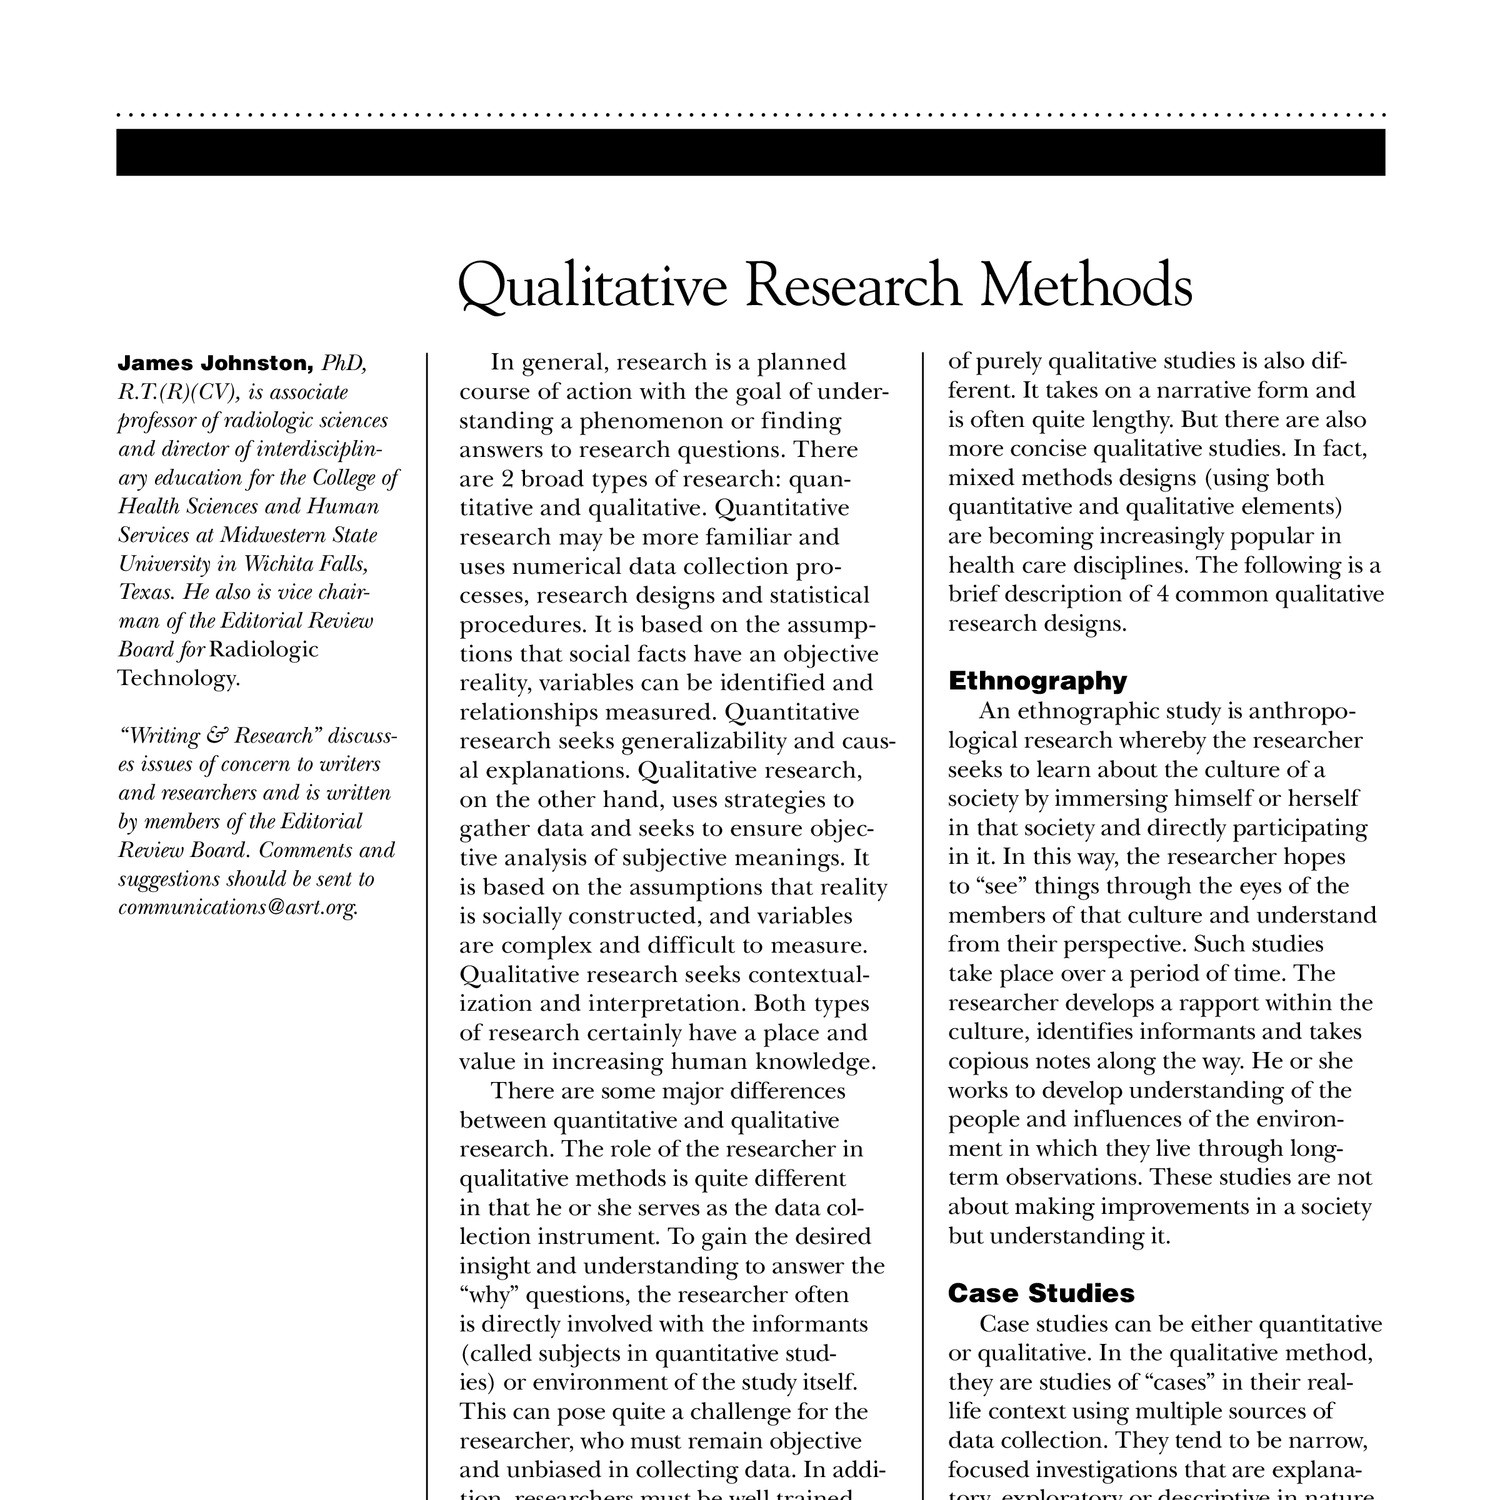 tools for qualitative research pdf